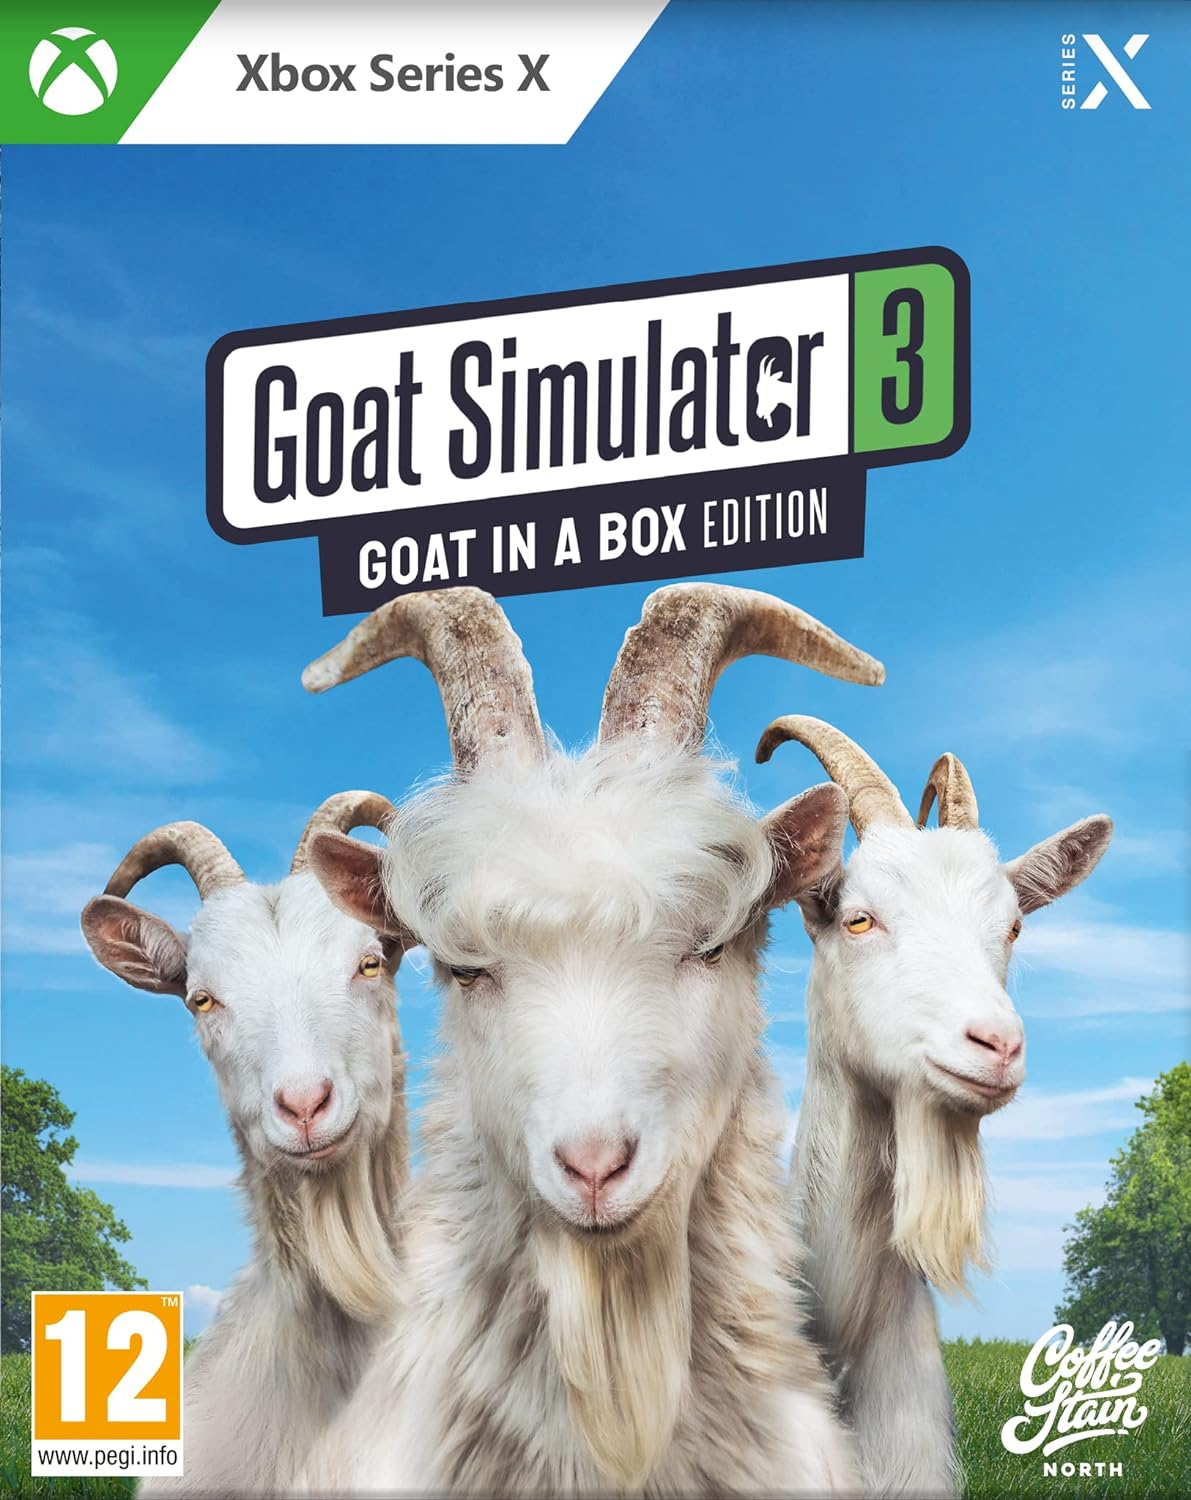 Goat Simulator 3: Goat in a Box Edition - Xbox Series X [New] | Yard's Games Ltd